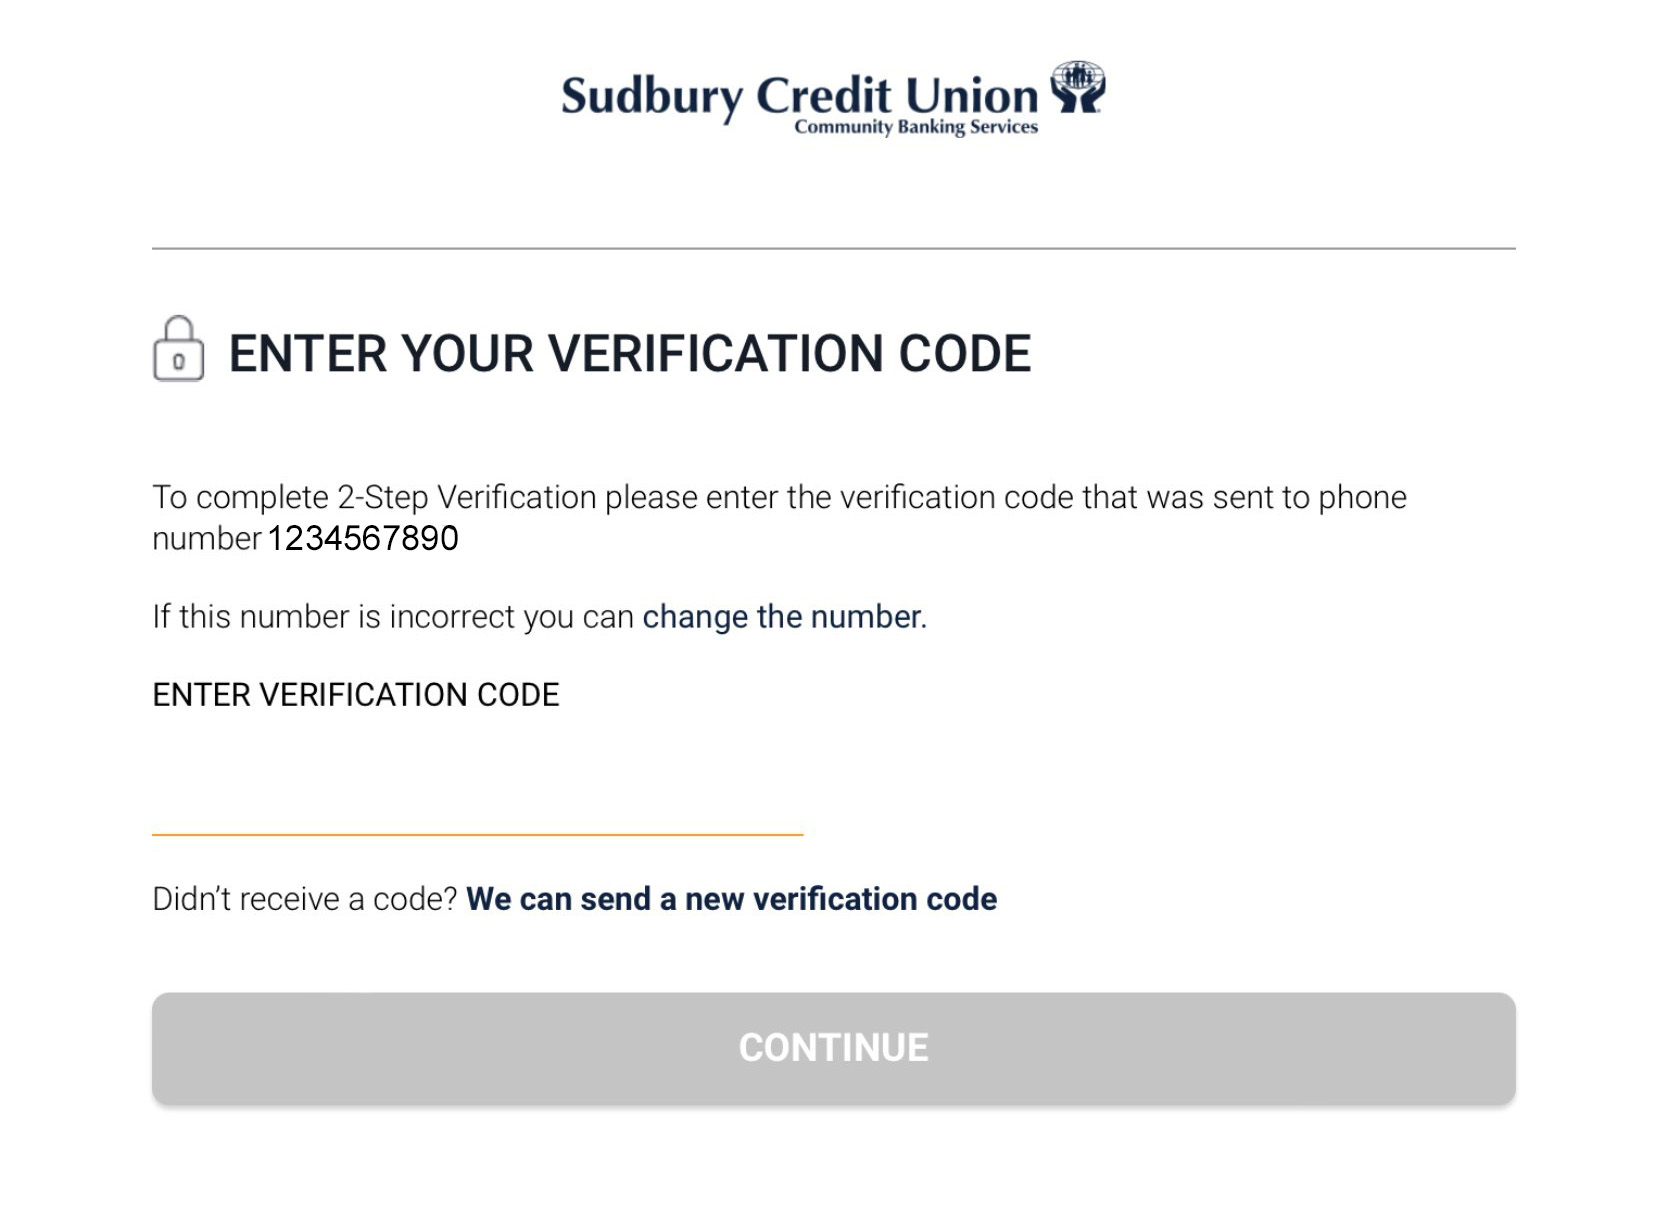 Step 3 - receive verification code